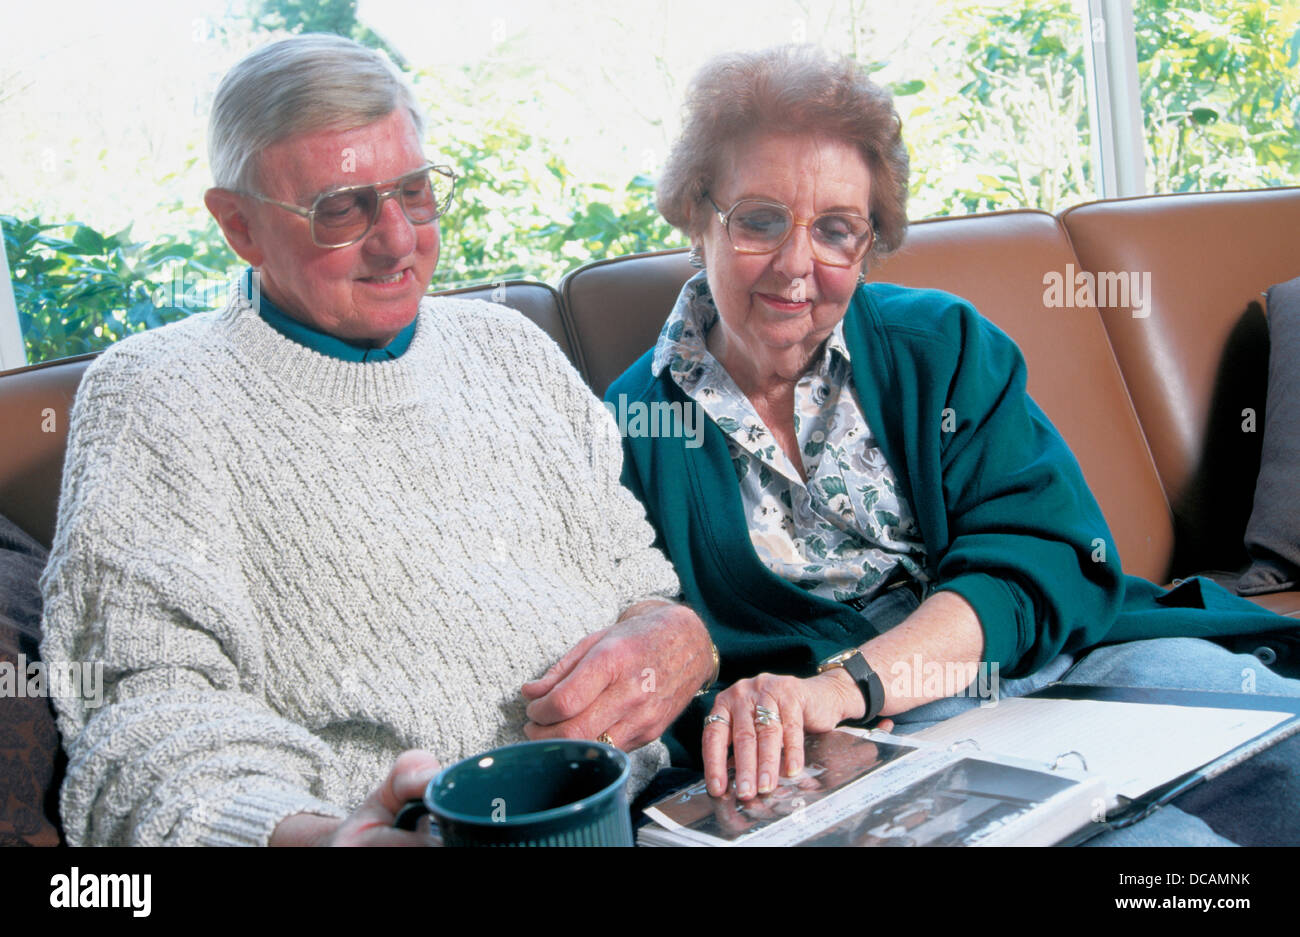 Senior couple looking at phot album Stock Photo